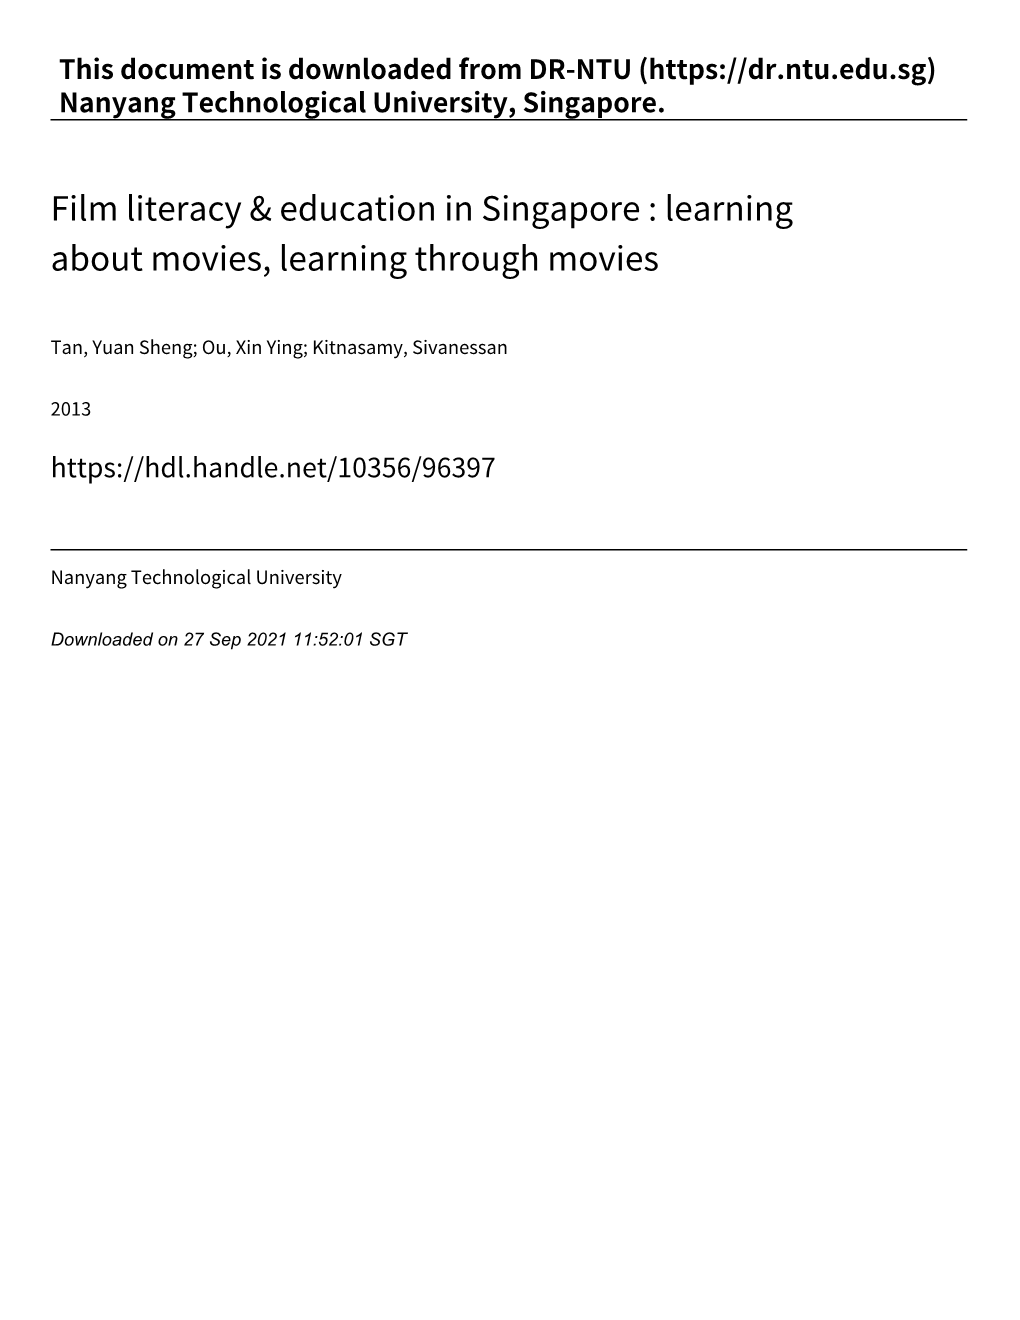 Film Literacy & Education in Singapore